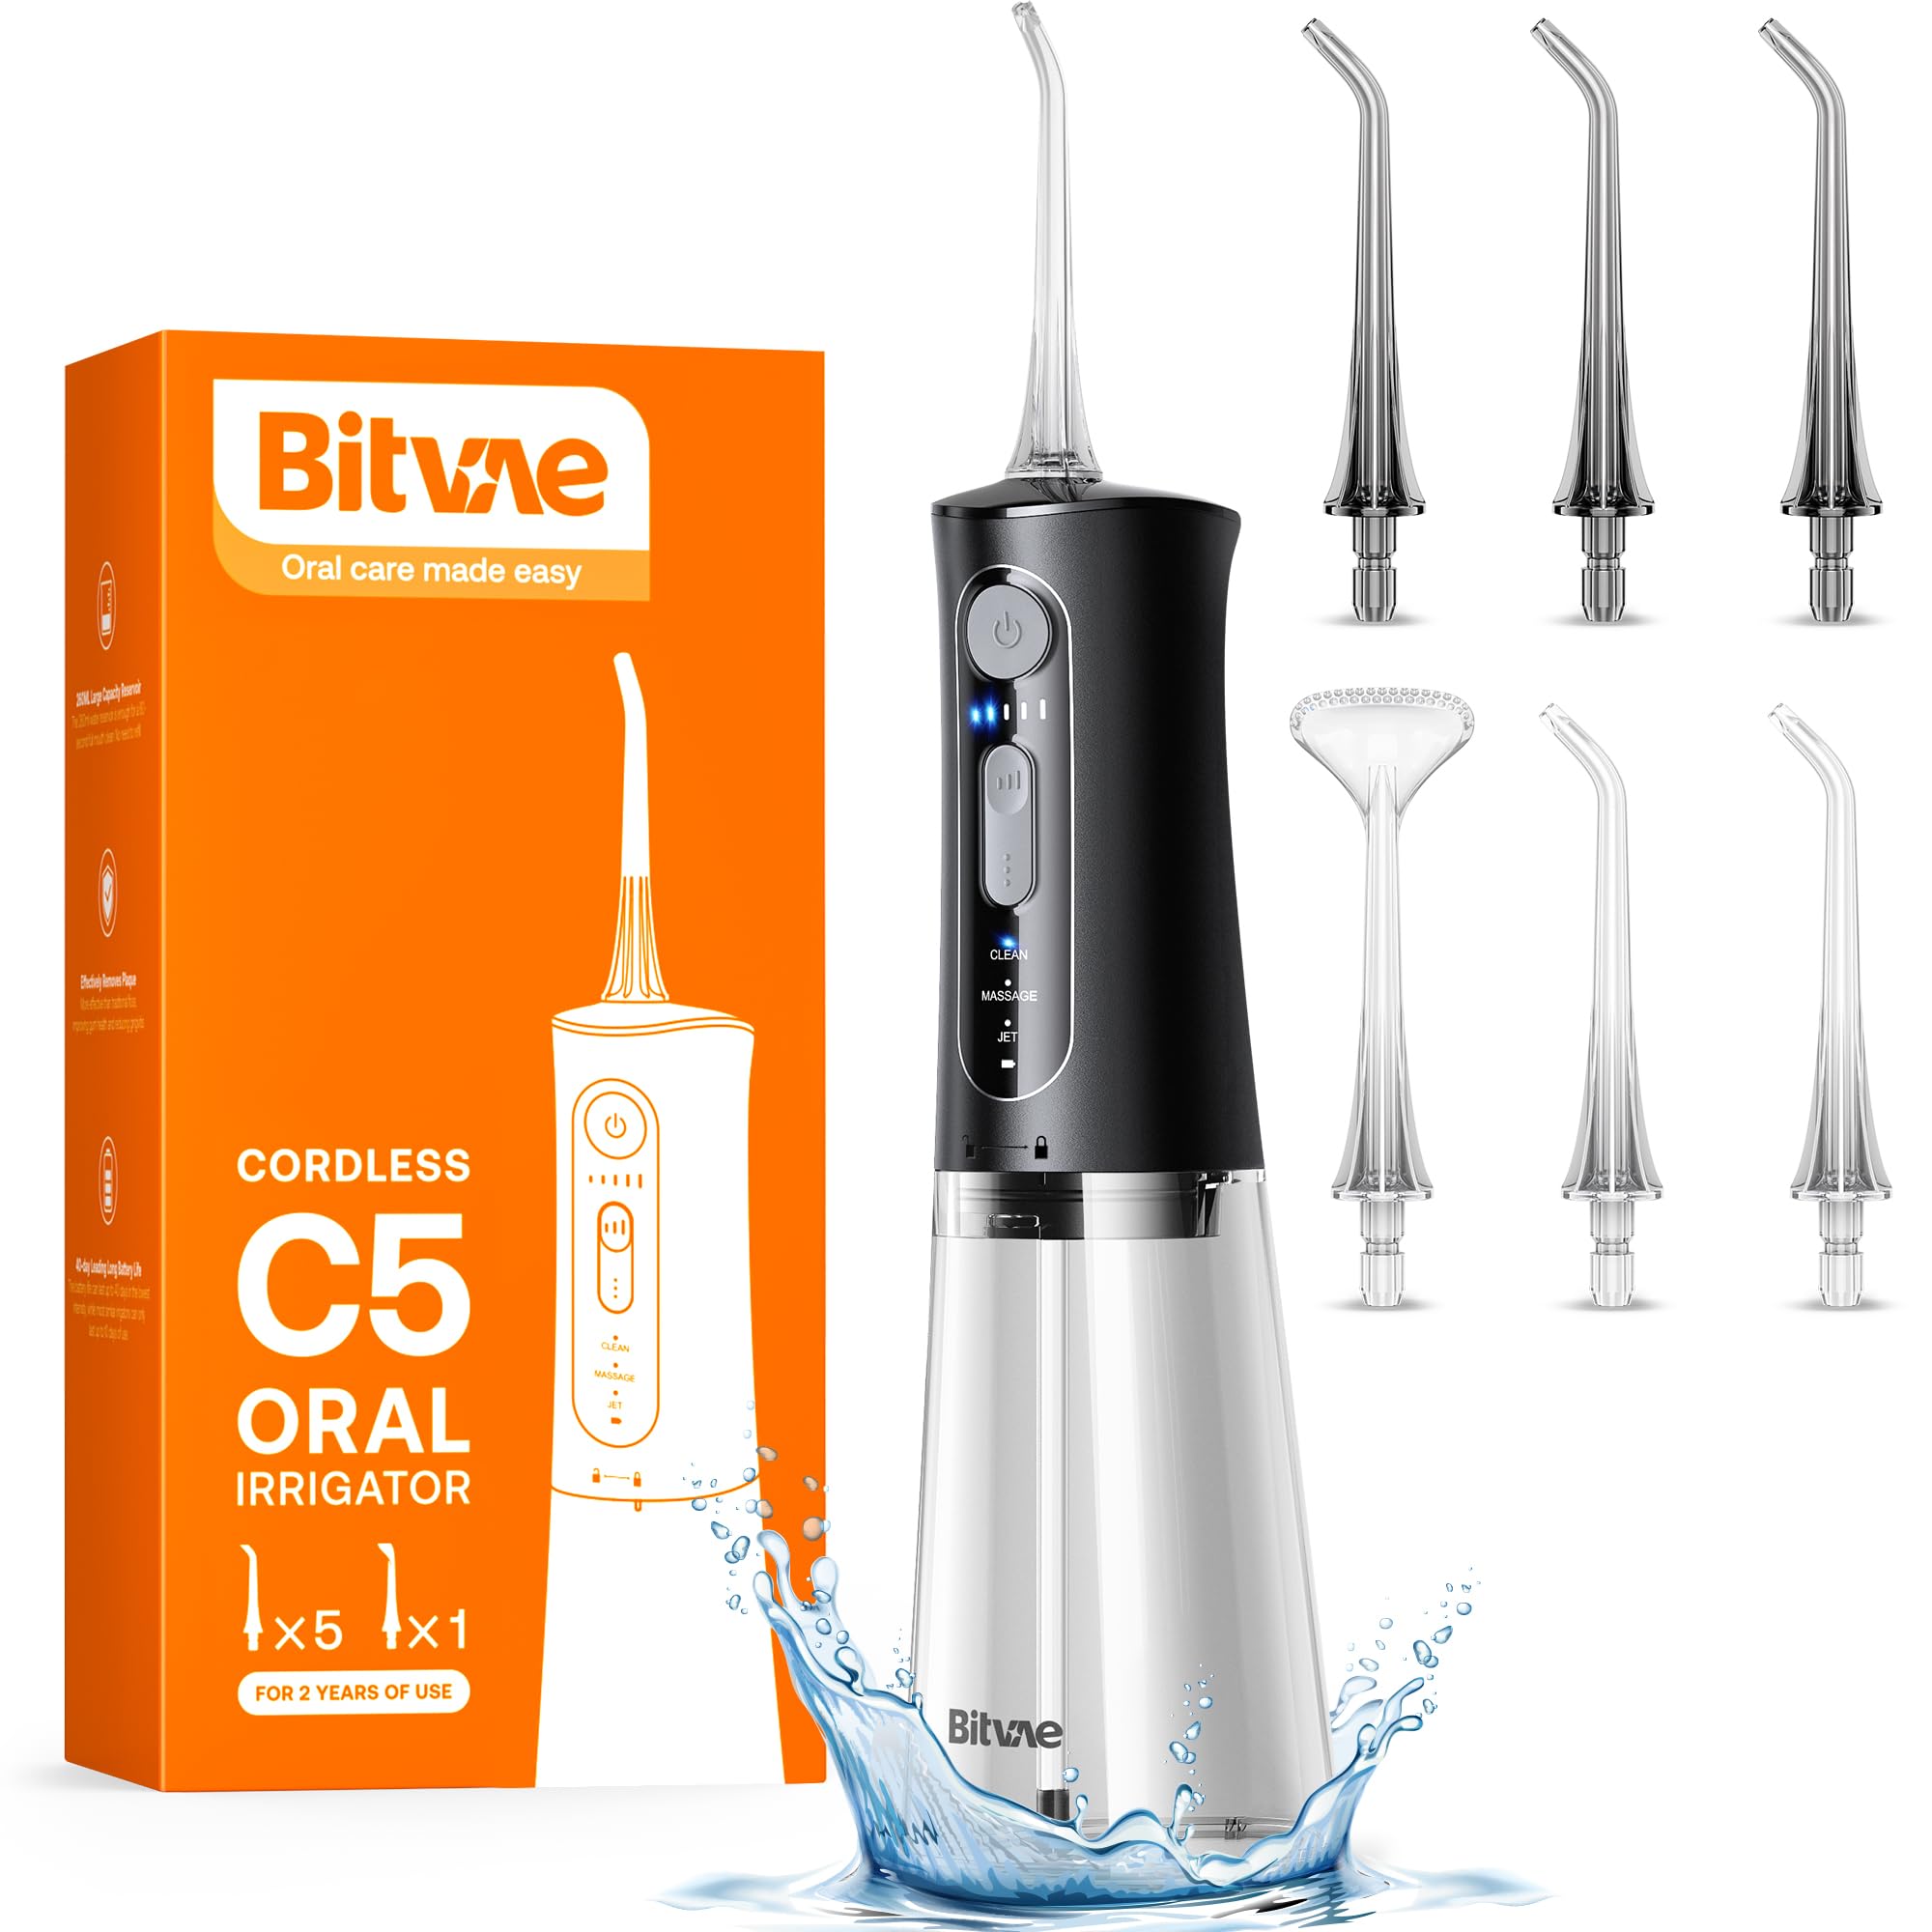 Bitvae 300-ML C2 Cordless Oral Irrigator Portable Water Flosser (Black) $18.80 + Free Shipping w/ Prime